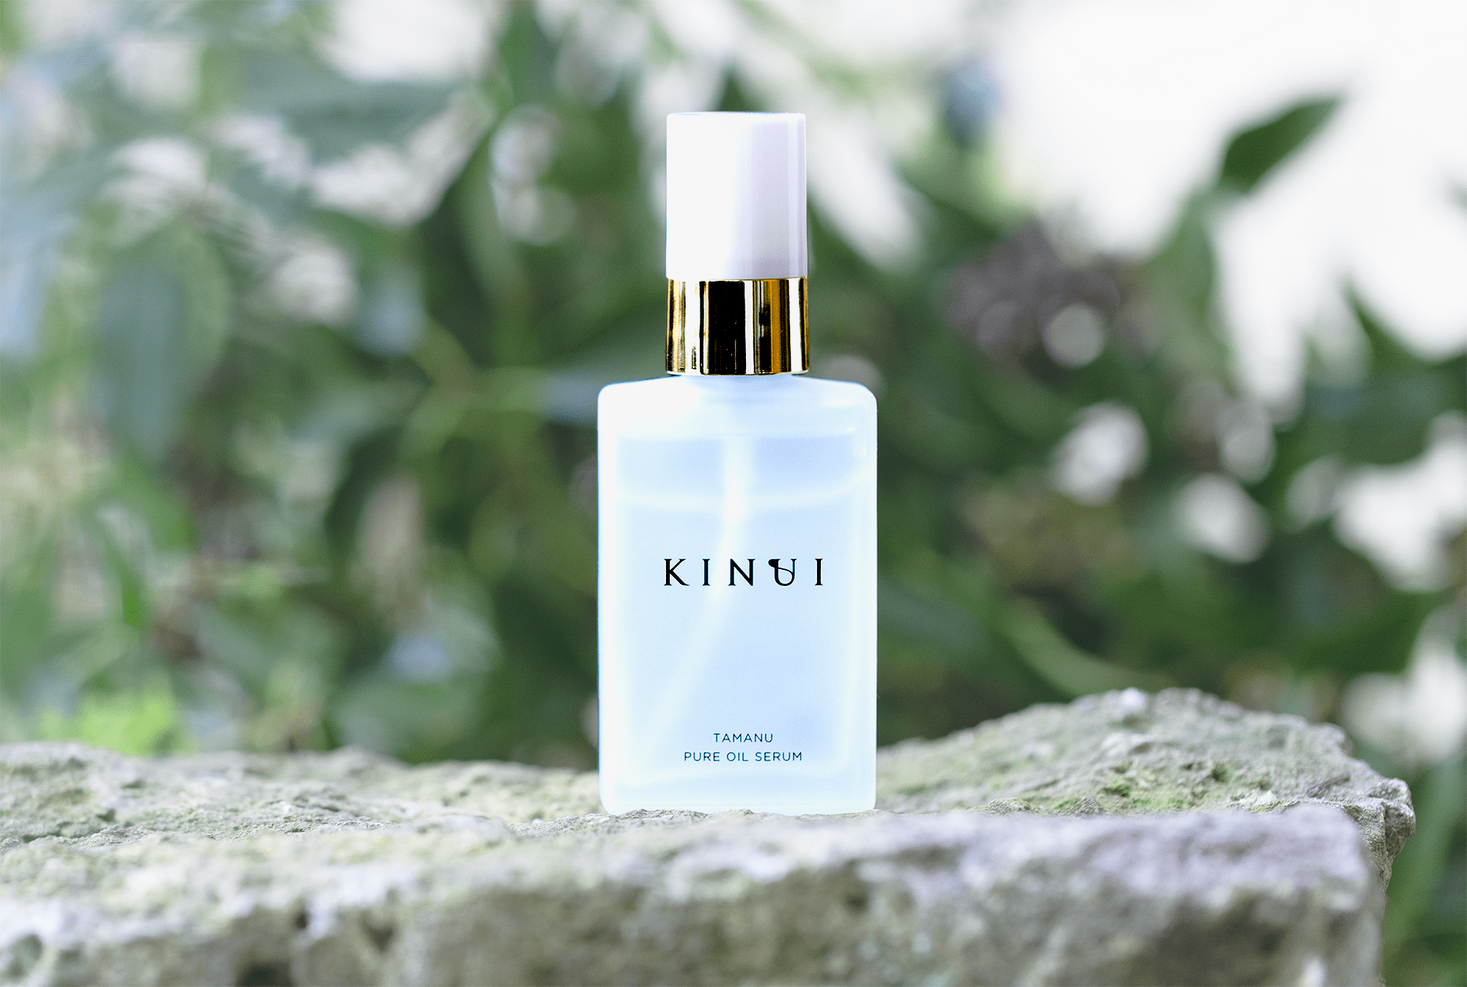 KINUI タマヌ ピュアオイル セラム 30ml - 基礎化粧品